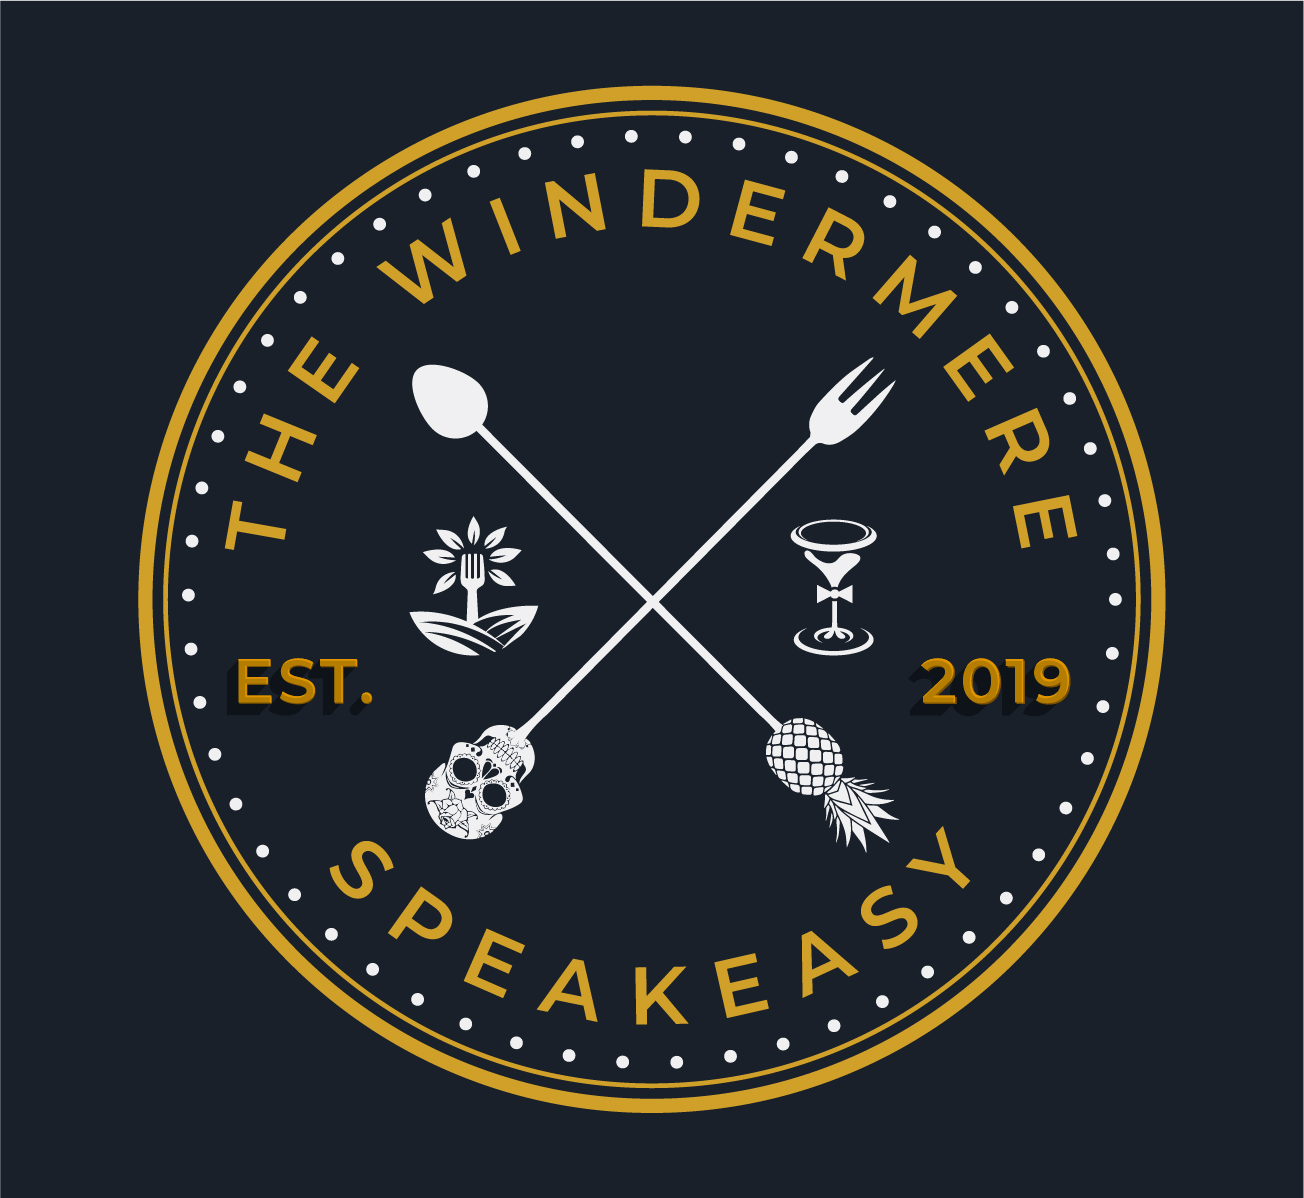 The Windermere Speakeasy logo